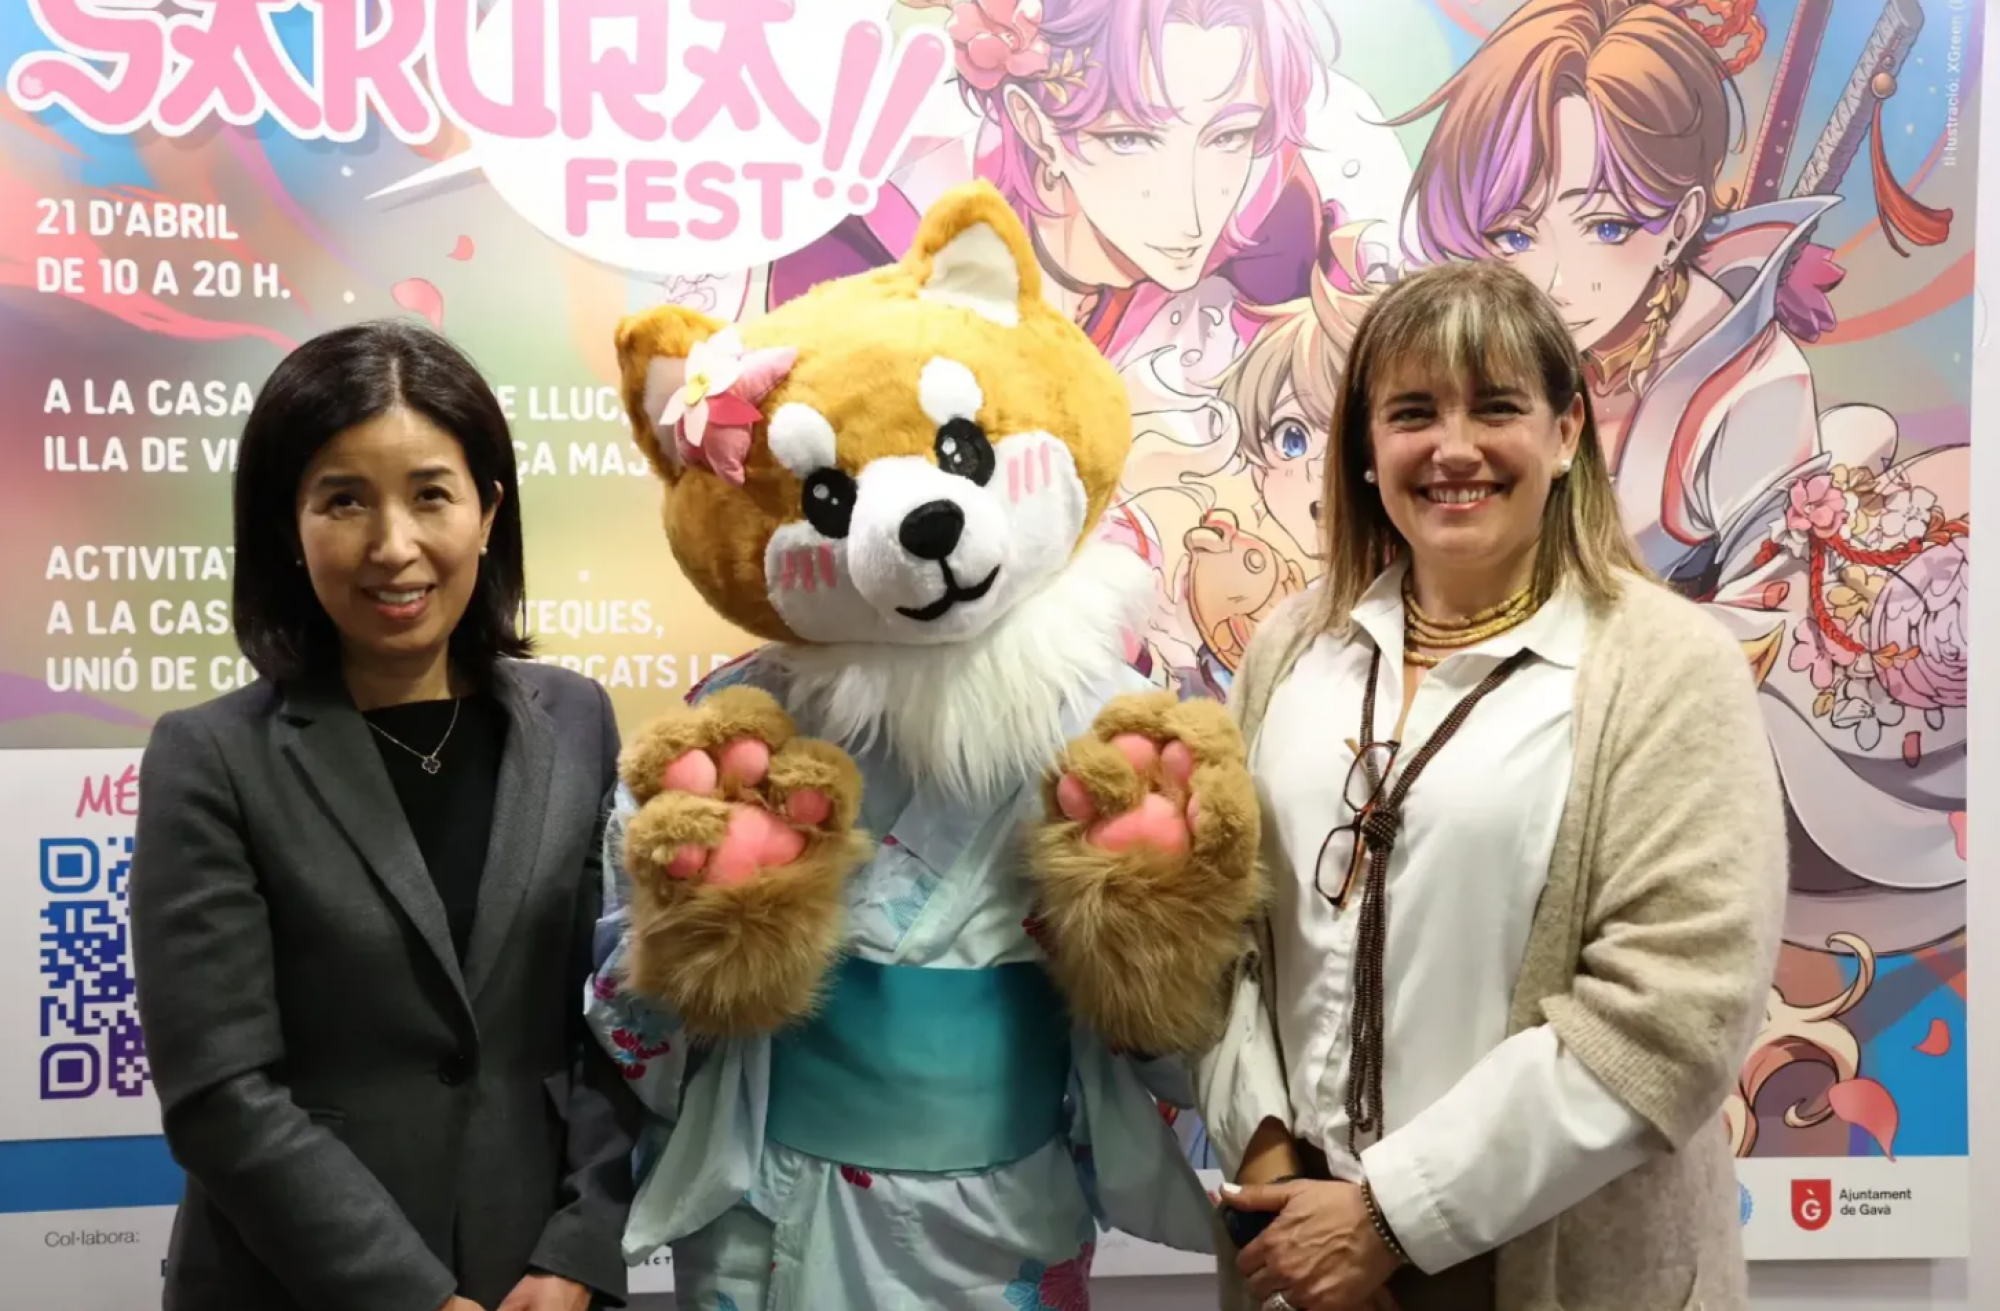 Sakura Fest, la fiesta 'otaku' de Gavà: una semana de cultura japonesa